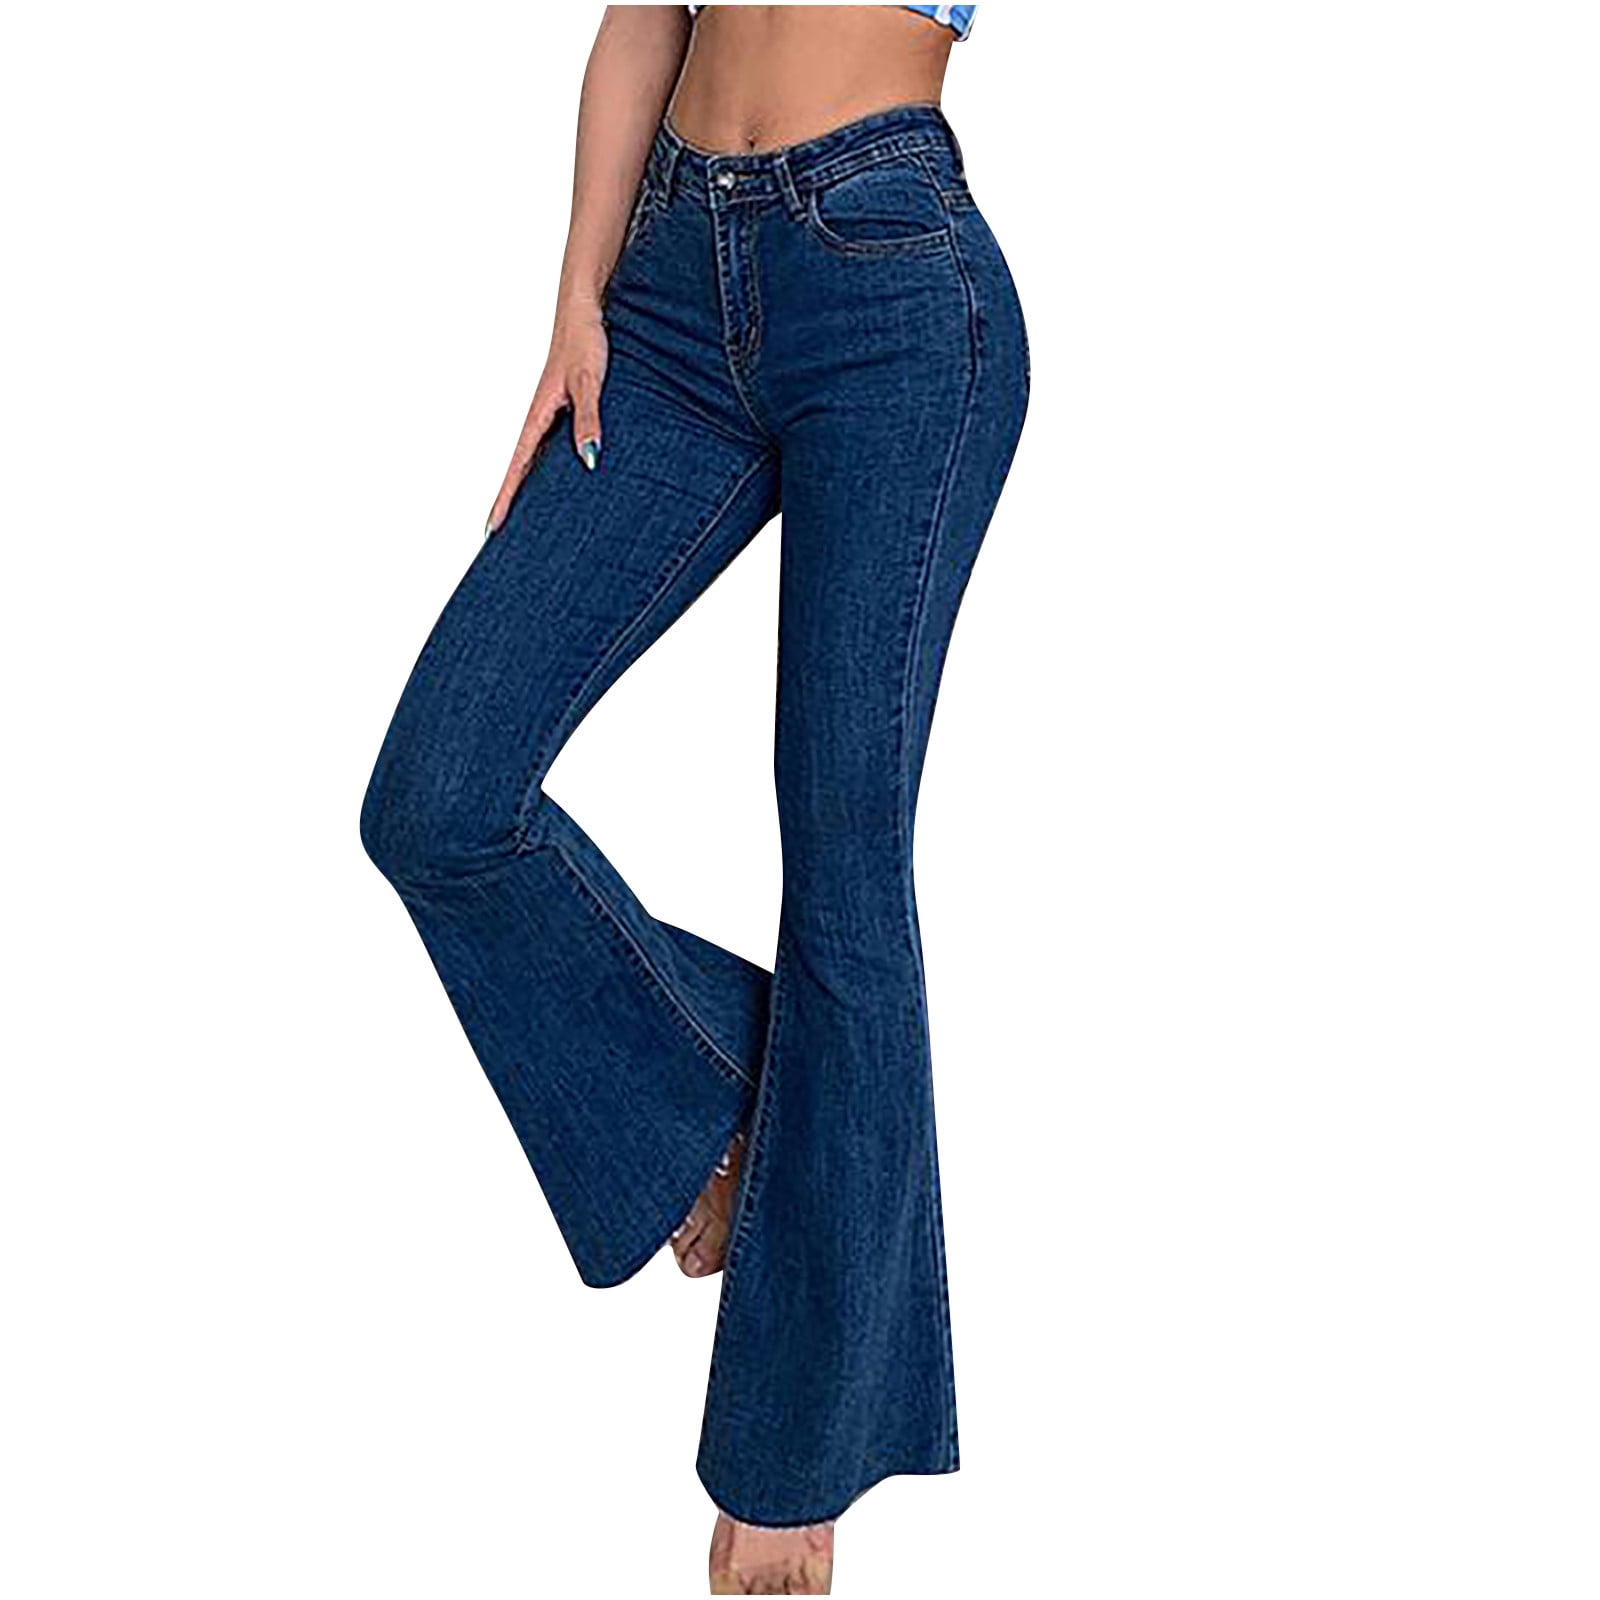 TLOOWY Womens Overall Jeans Ladies Denim Bib Pants Distressed Ripped Hole Denim Pants High Waist Loose Casual Denim Trousers 